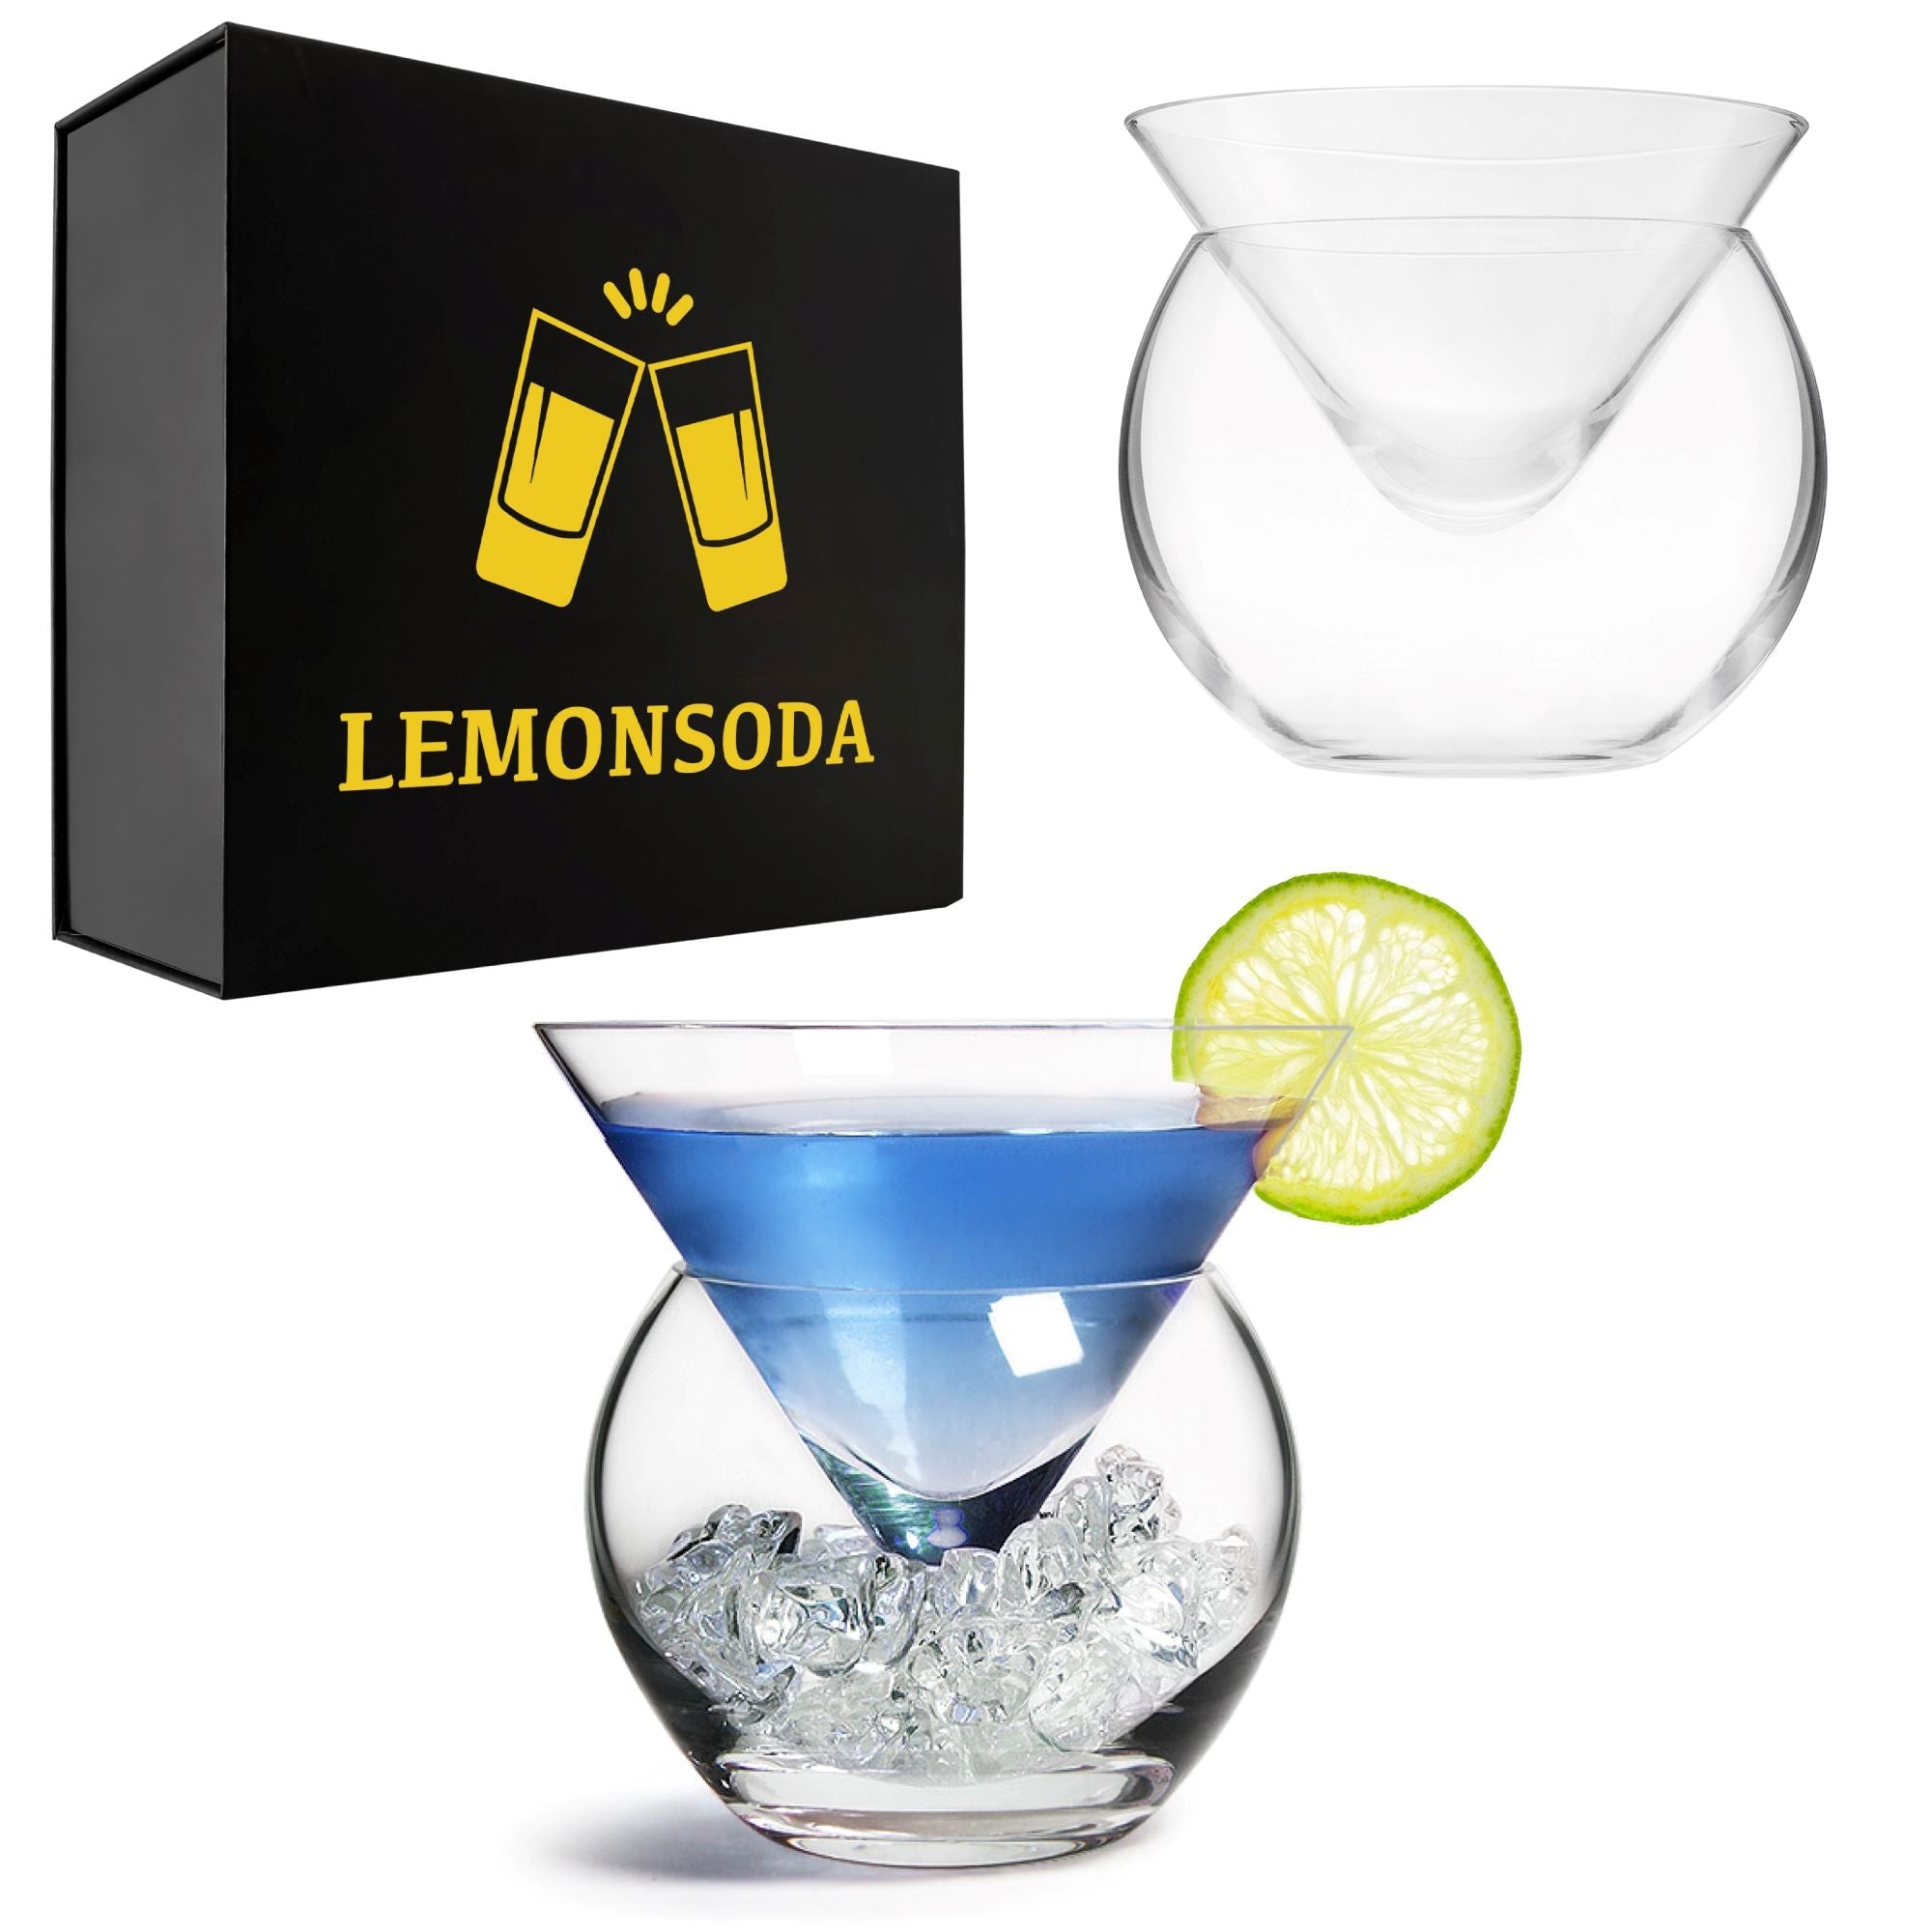 Stemless Martini Glasses with Chiller Set by Lemonsoda